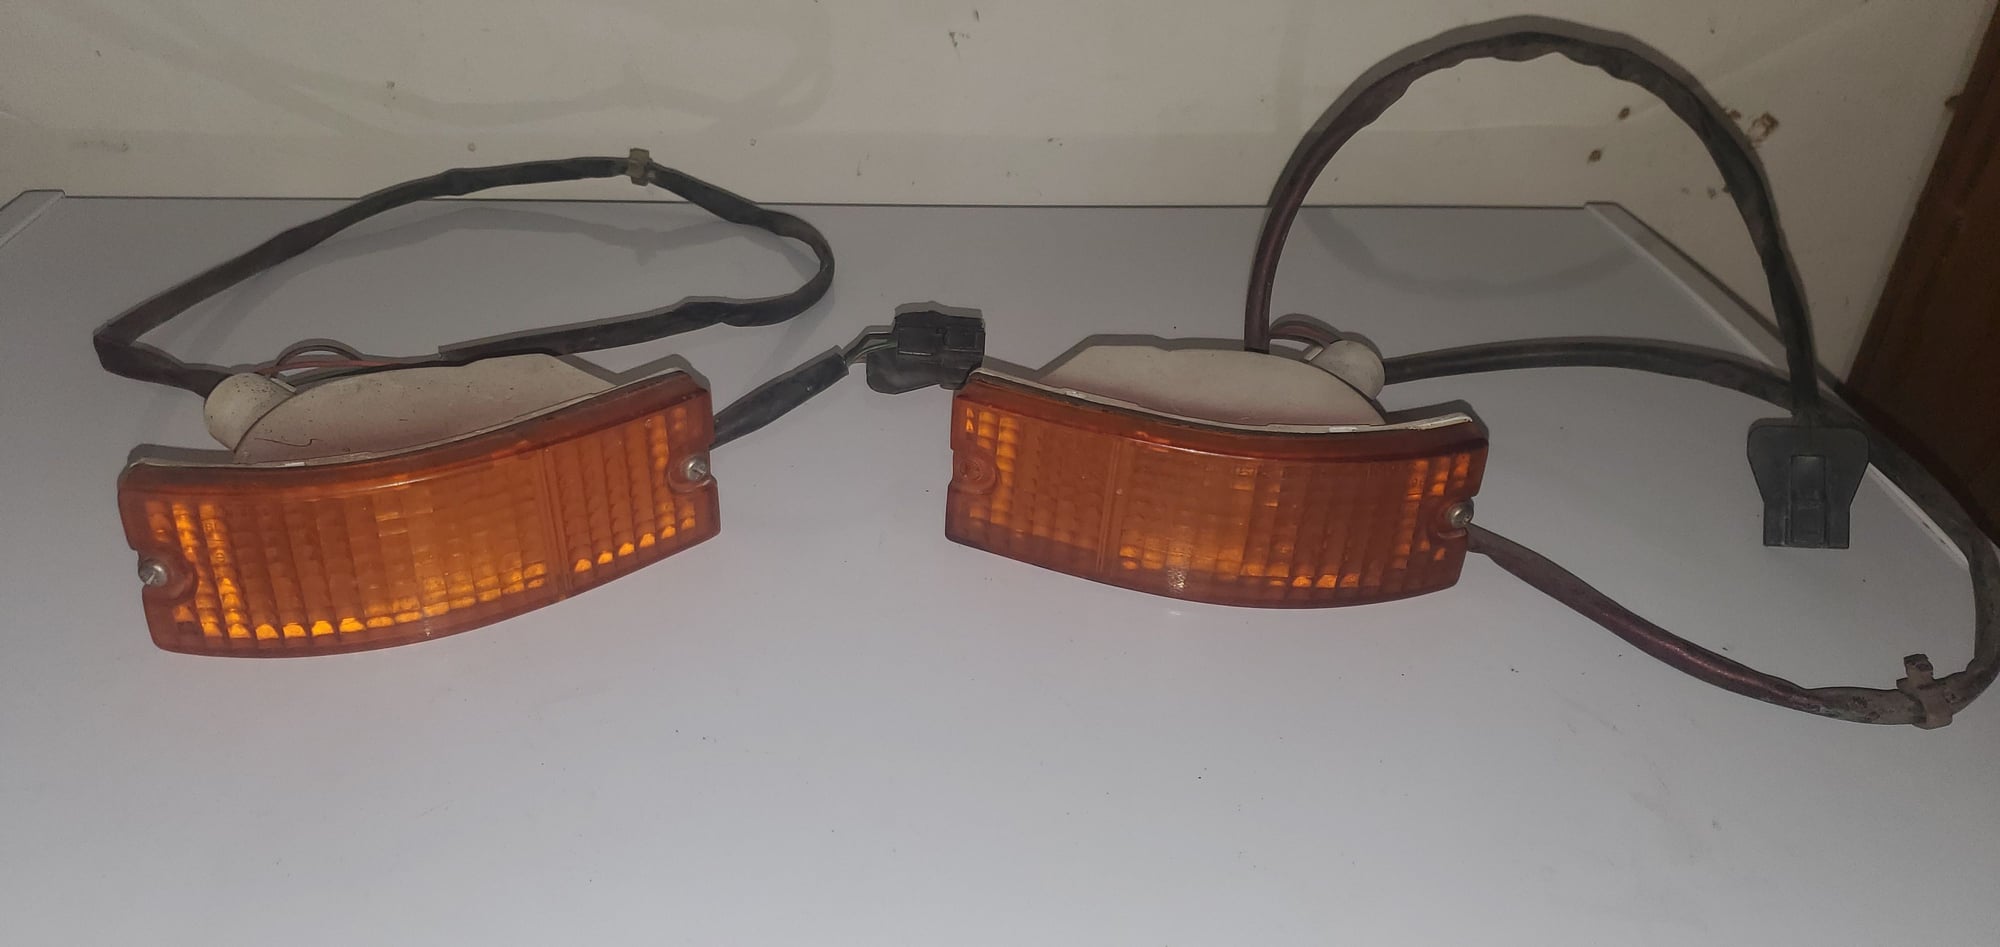 Lights - 1st Gen Turn Signals - Used - 1981 to 1985 Mazda RX-7 - Allen, TX 75002, United States